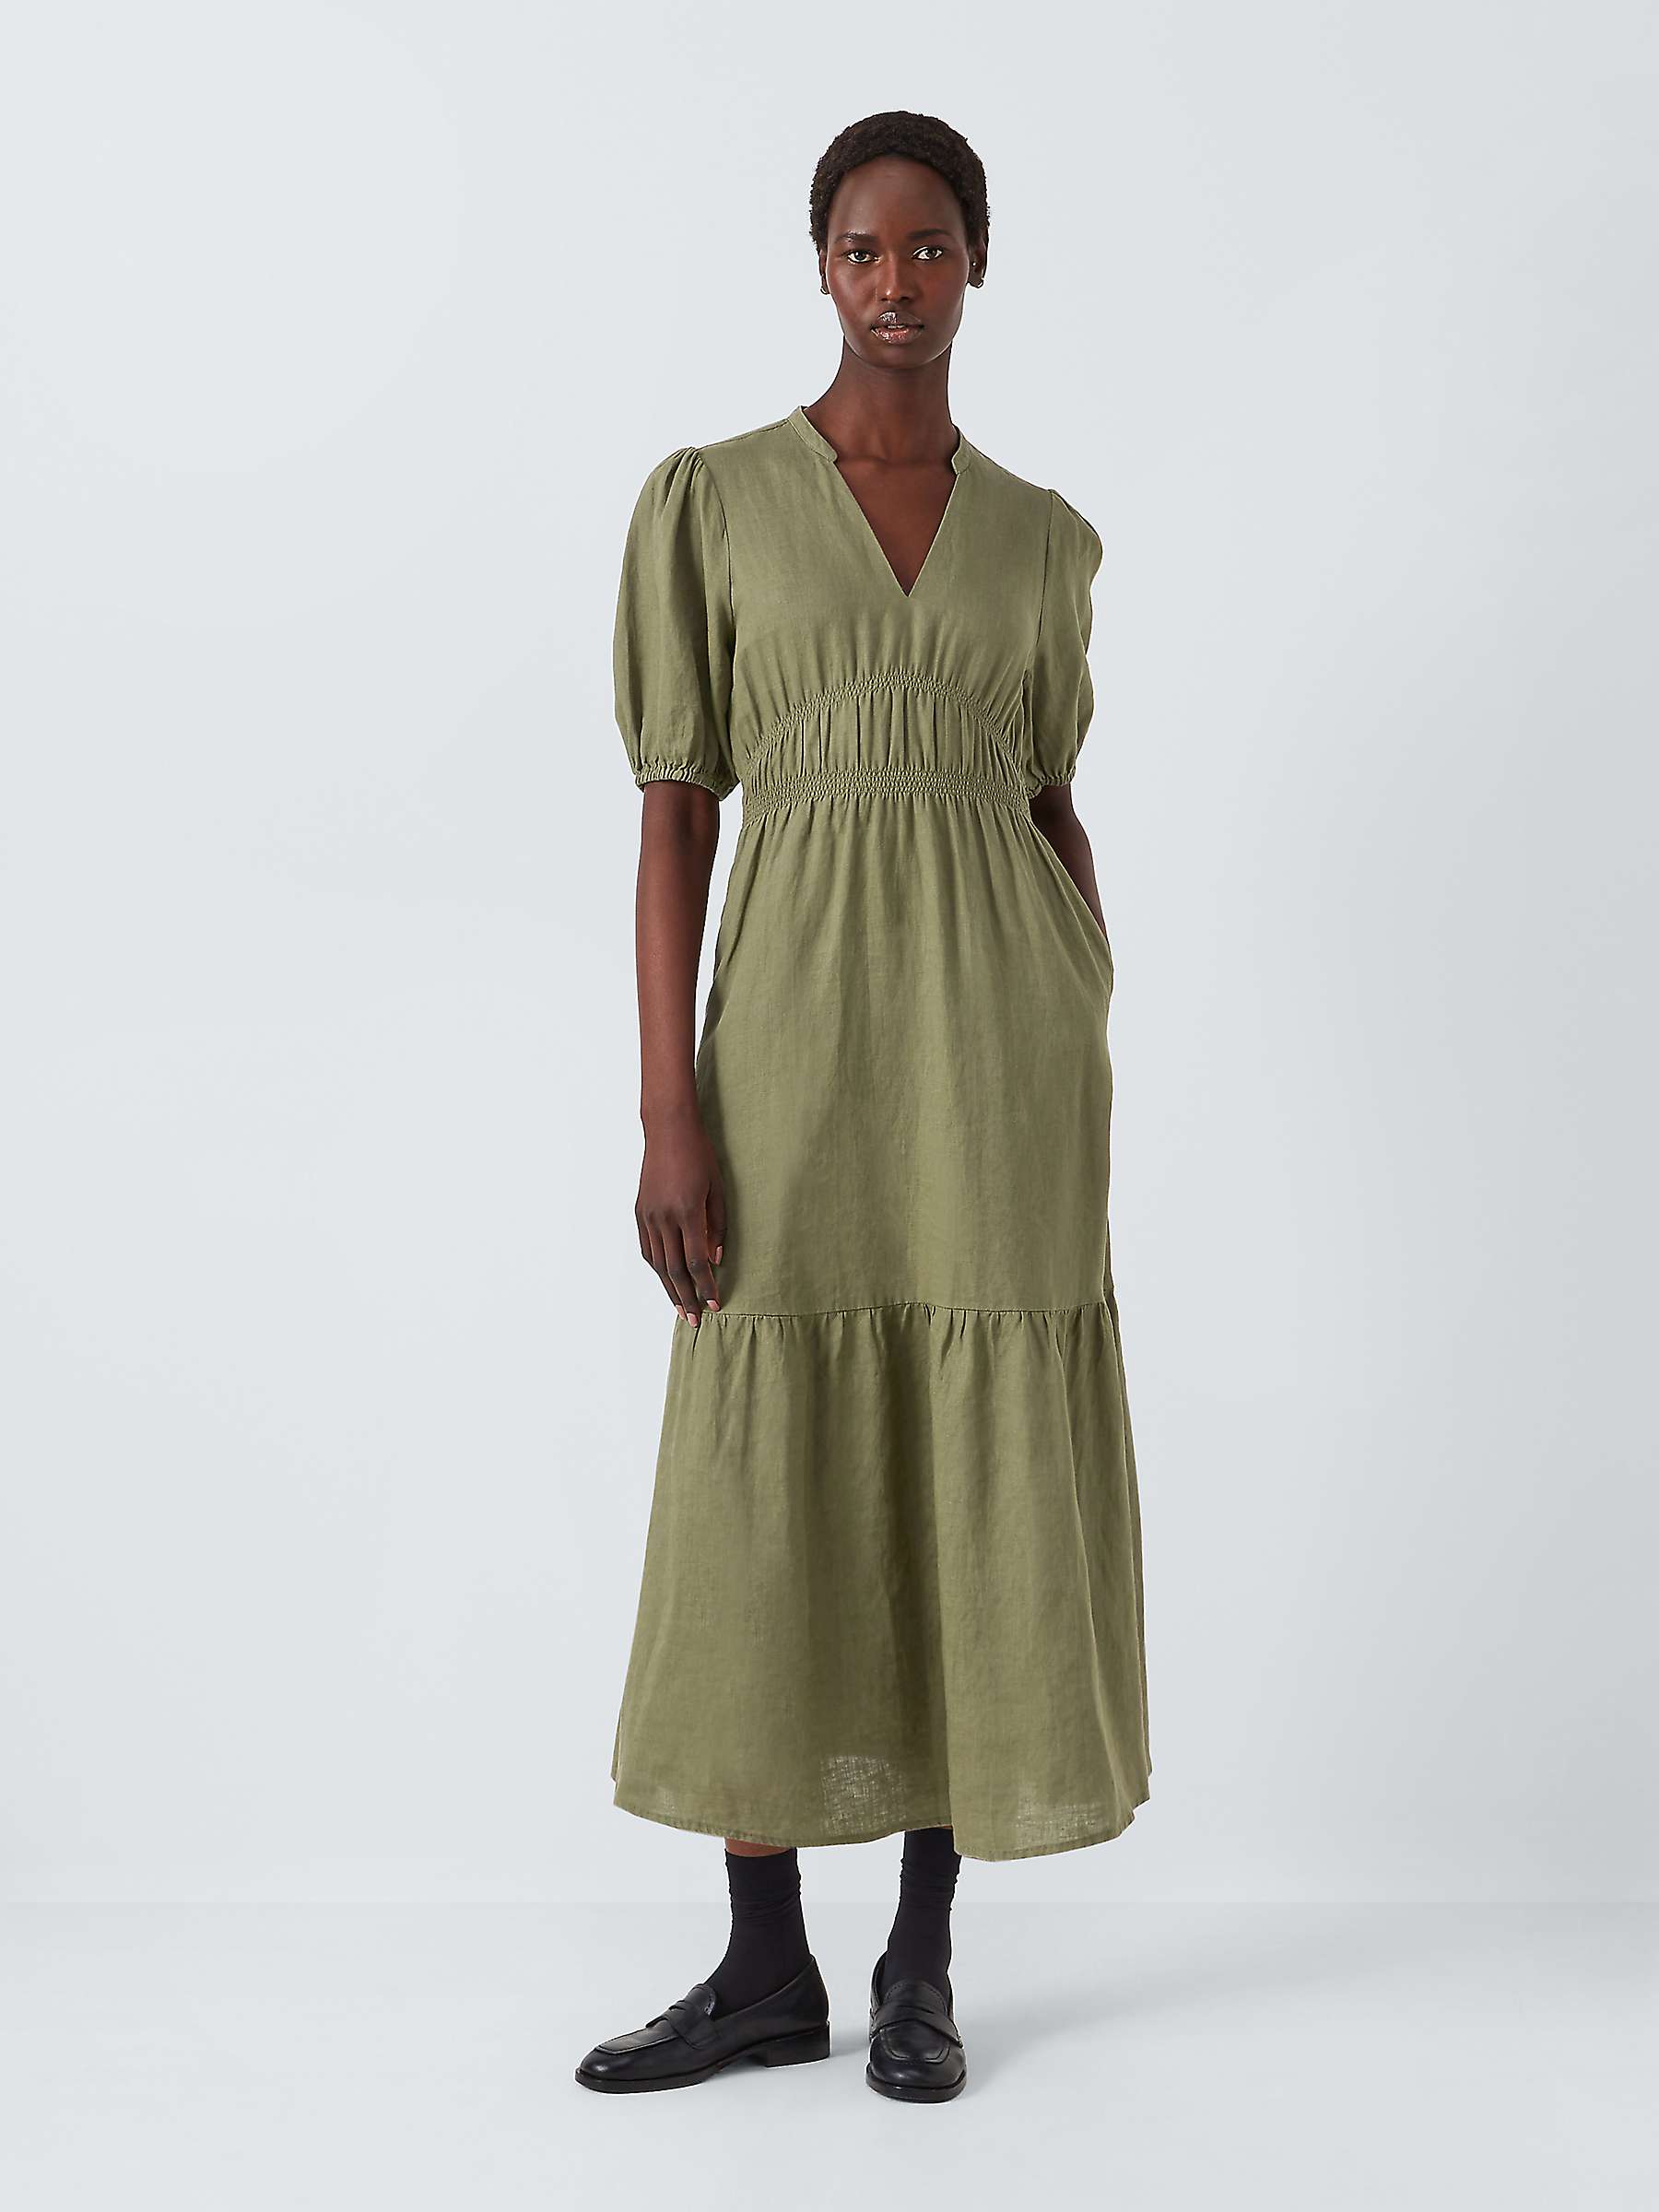 Buy John Lewis Linen Sheered Dress Online at johnlewis.com